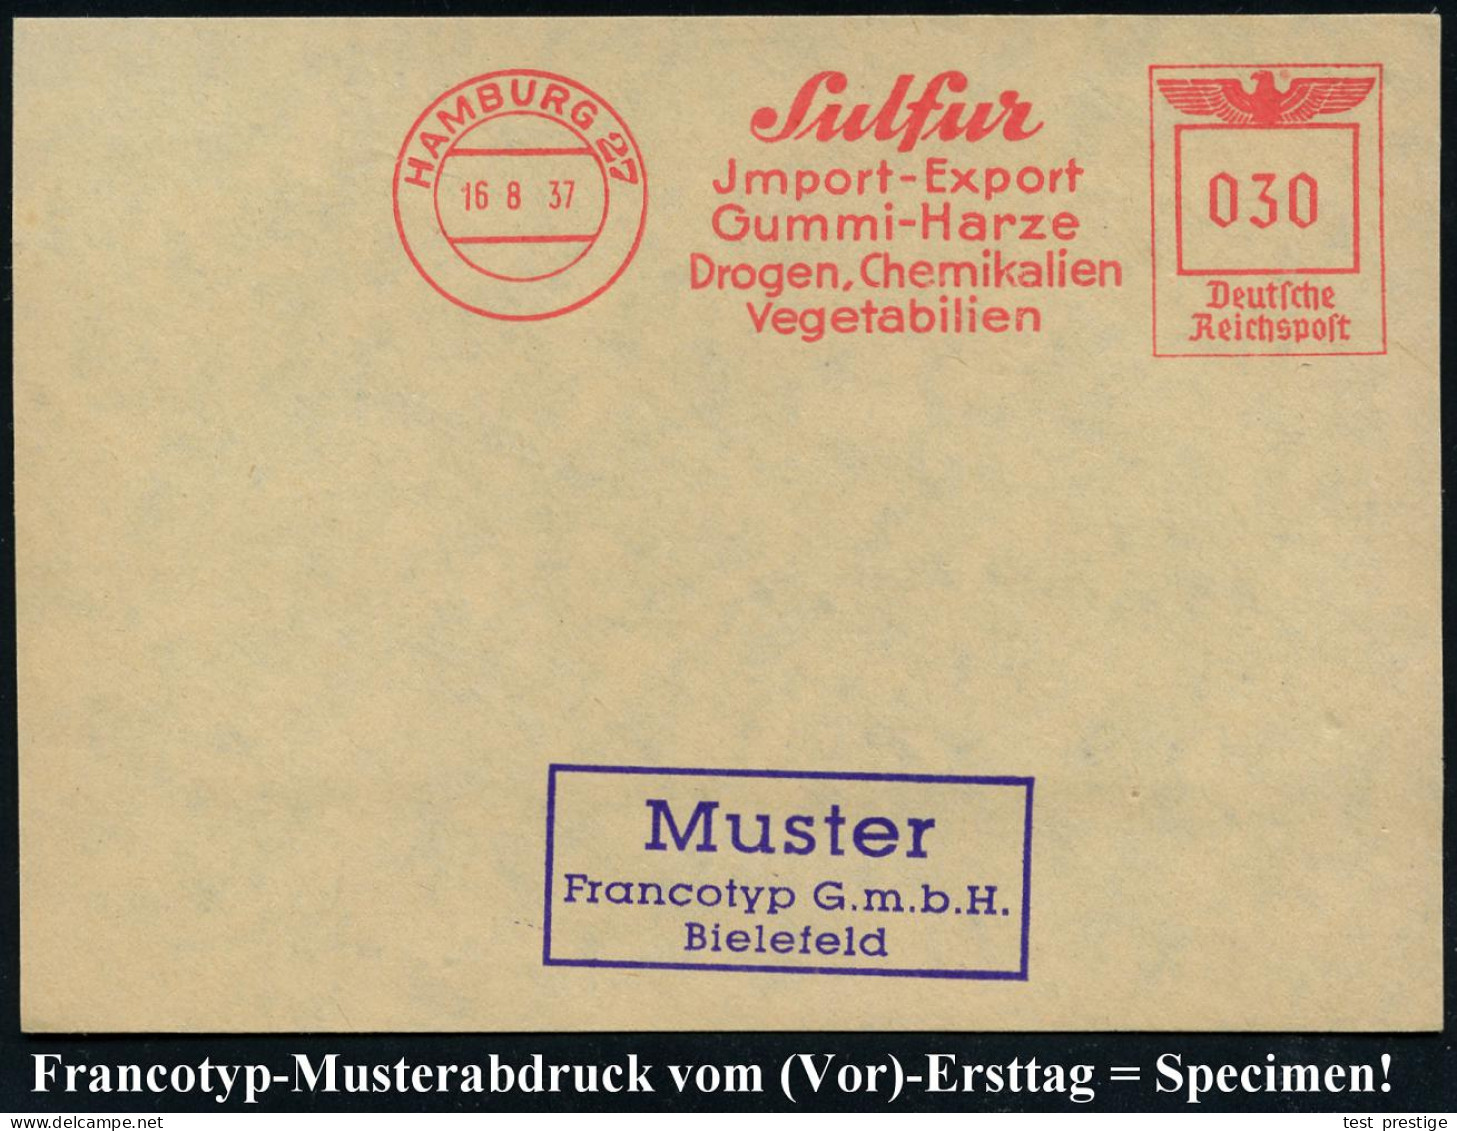 HAMBURG 27/ Sulfur/ Jmport-Export/ Gummi-Harze/ Drogen,Chemikalien.. 1937 (16.8.) AFS-Musterabdruck Francotyp "Reichsadl - Chemie